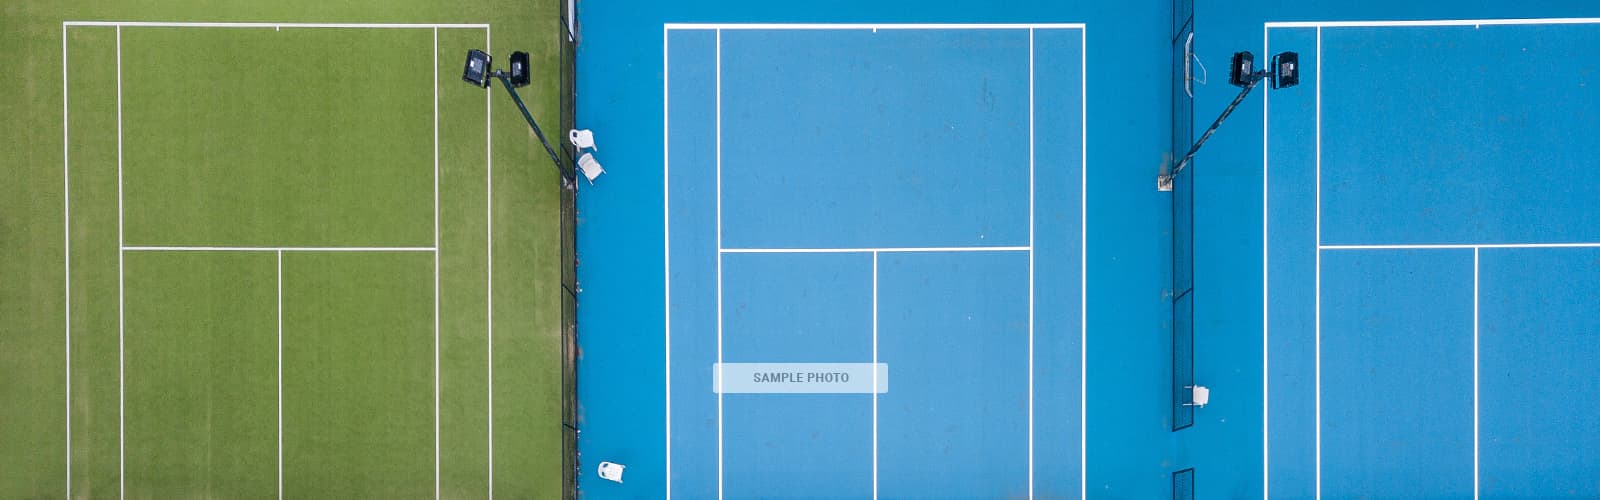 De Portola Middle School Tennis Courts in San Diego California - undefined